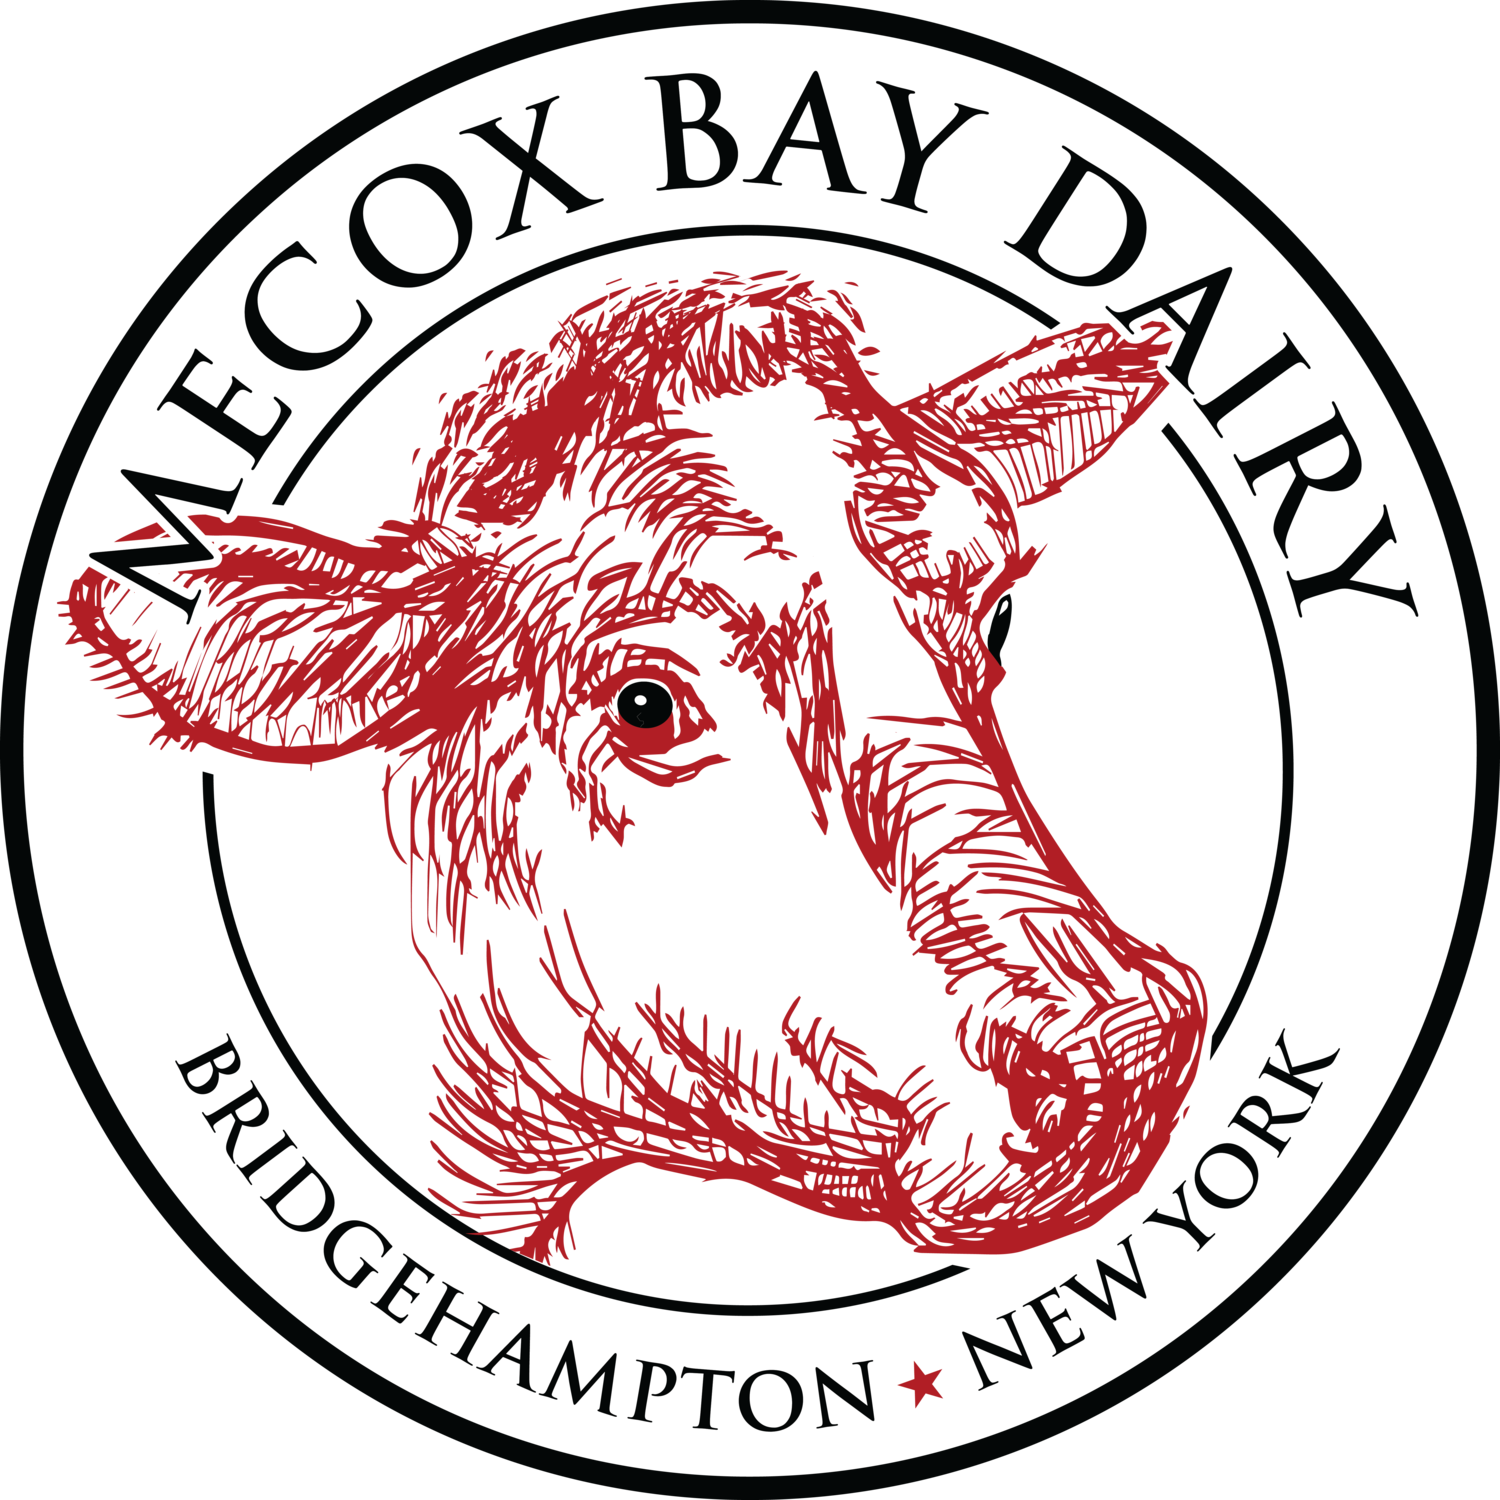 Mecox Bay Dairy